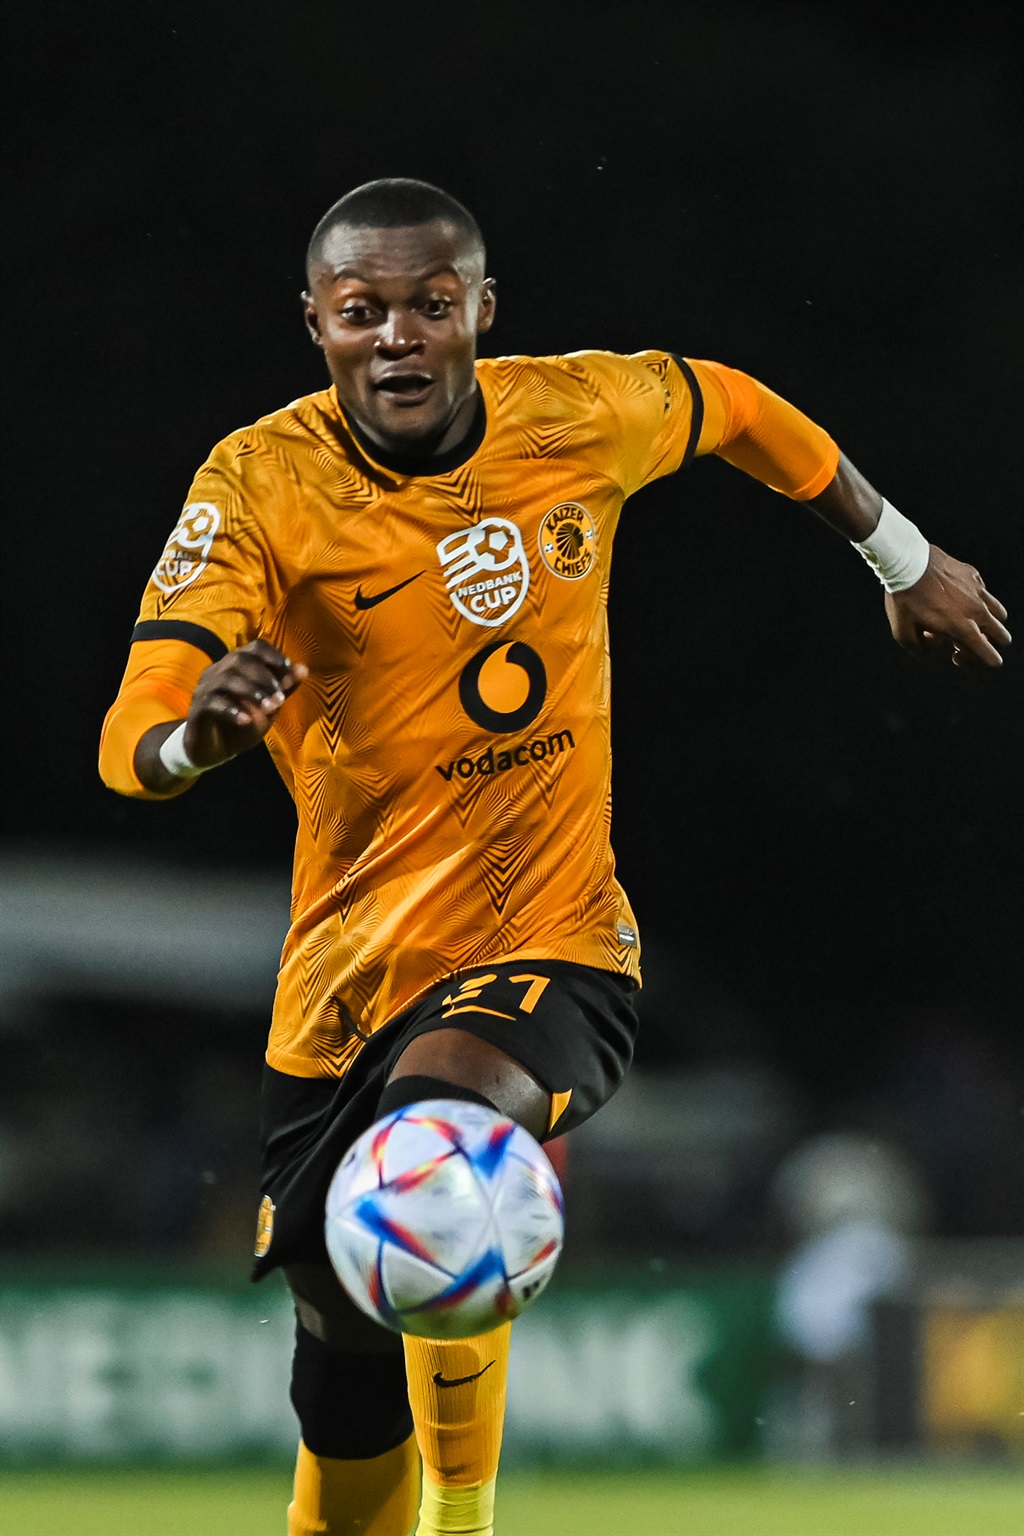 Orlando Pirates XI against Kaizer Chiefs in Nedbank Cup semi-final - Lorch  absent, Erasmus starts